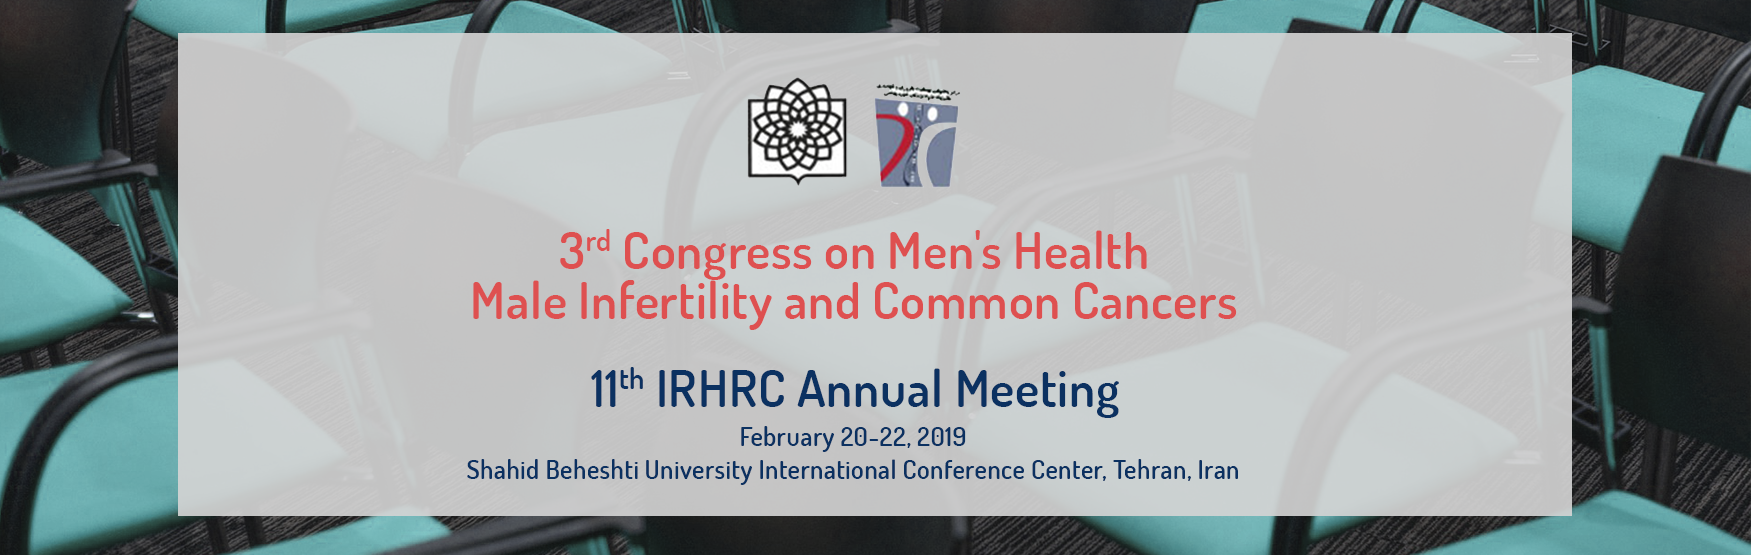 Evento - 3rd Congress on Men's Health - February 2019 - Tehran Iran